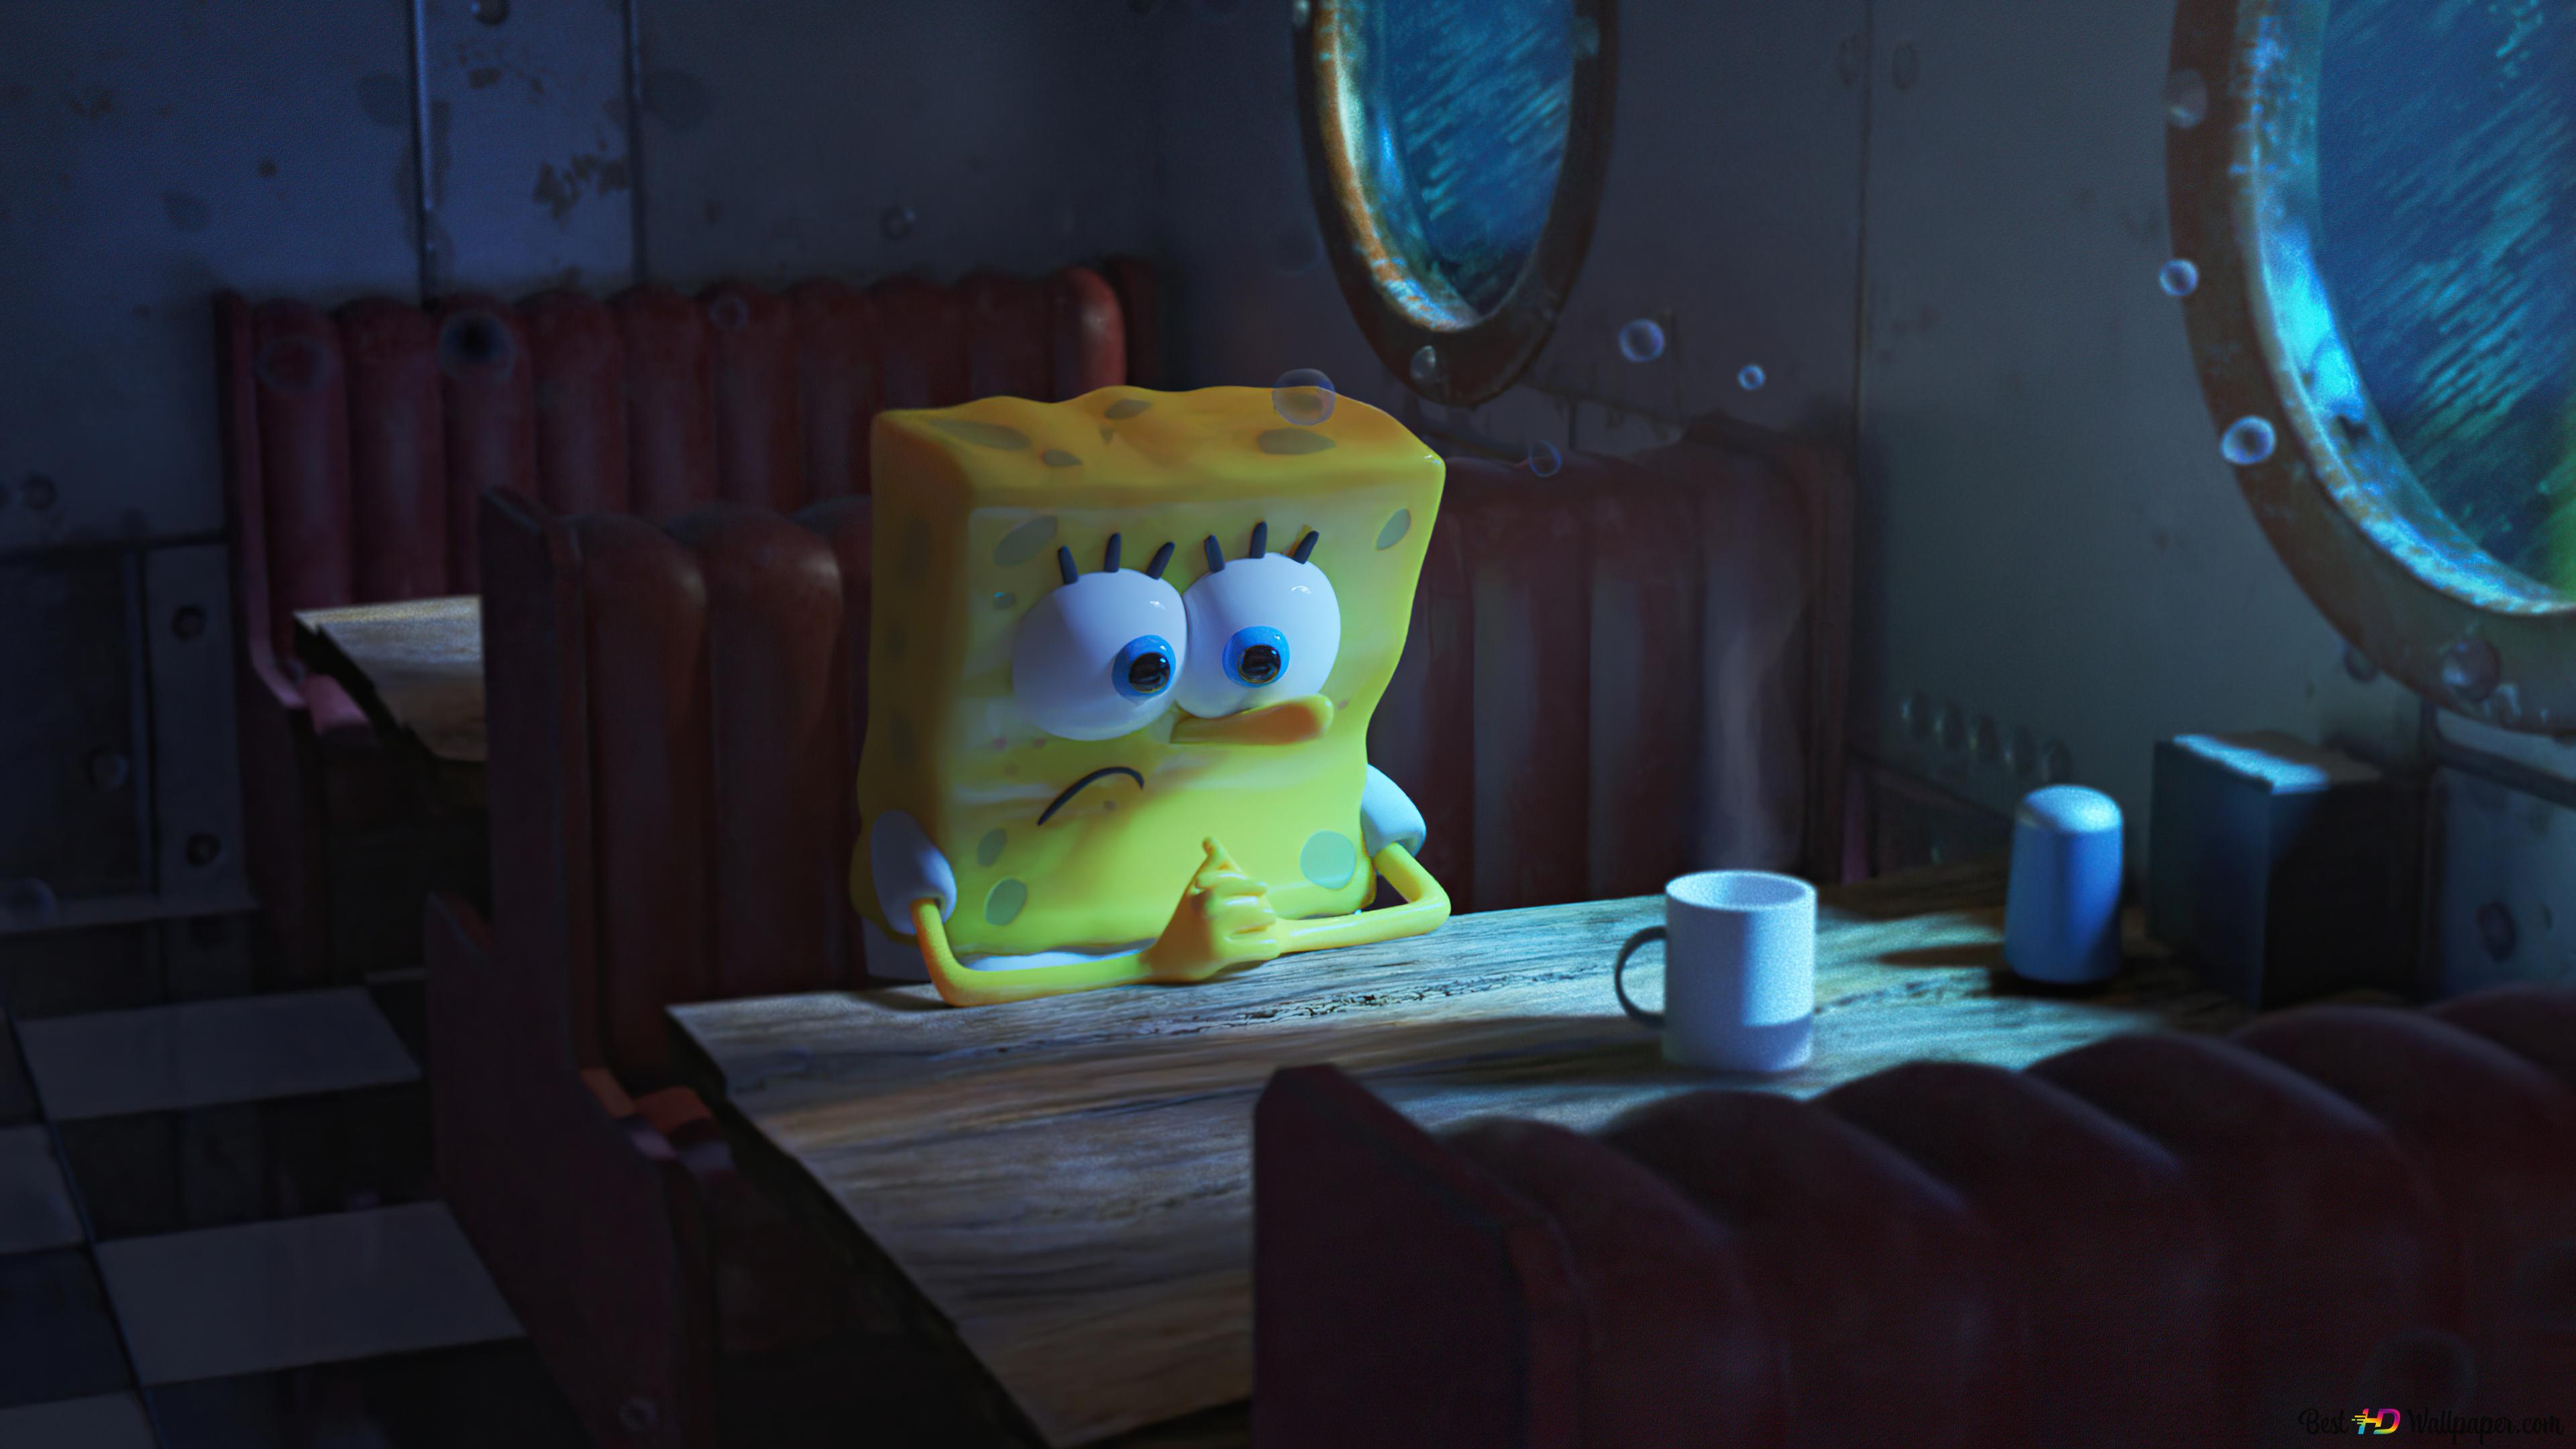 Cartoon character spongebob sitting sad alone at desk in room k wallpaper download